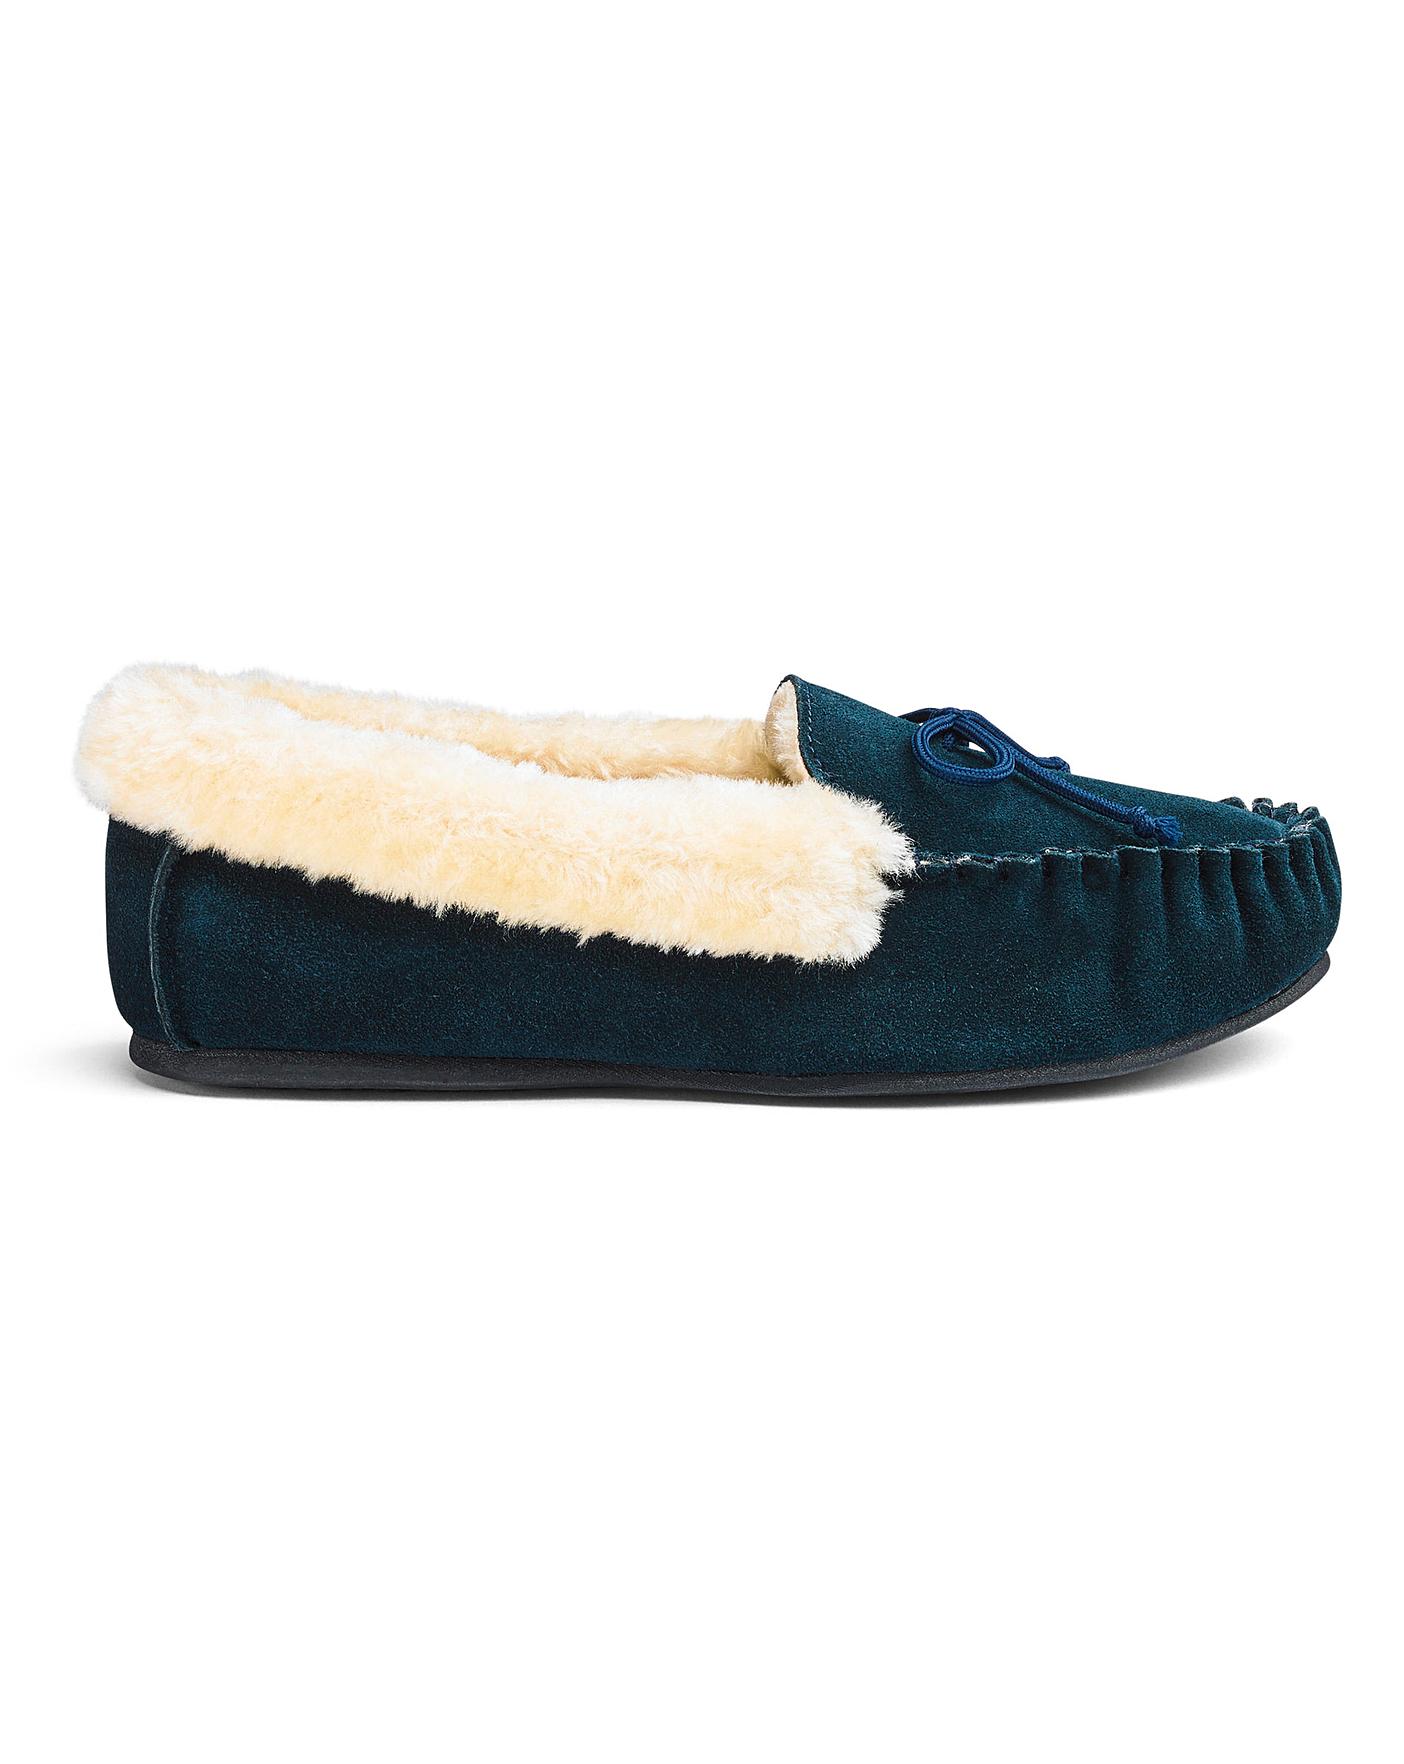 slippers eee width